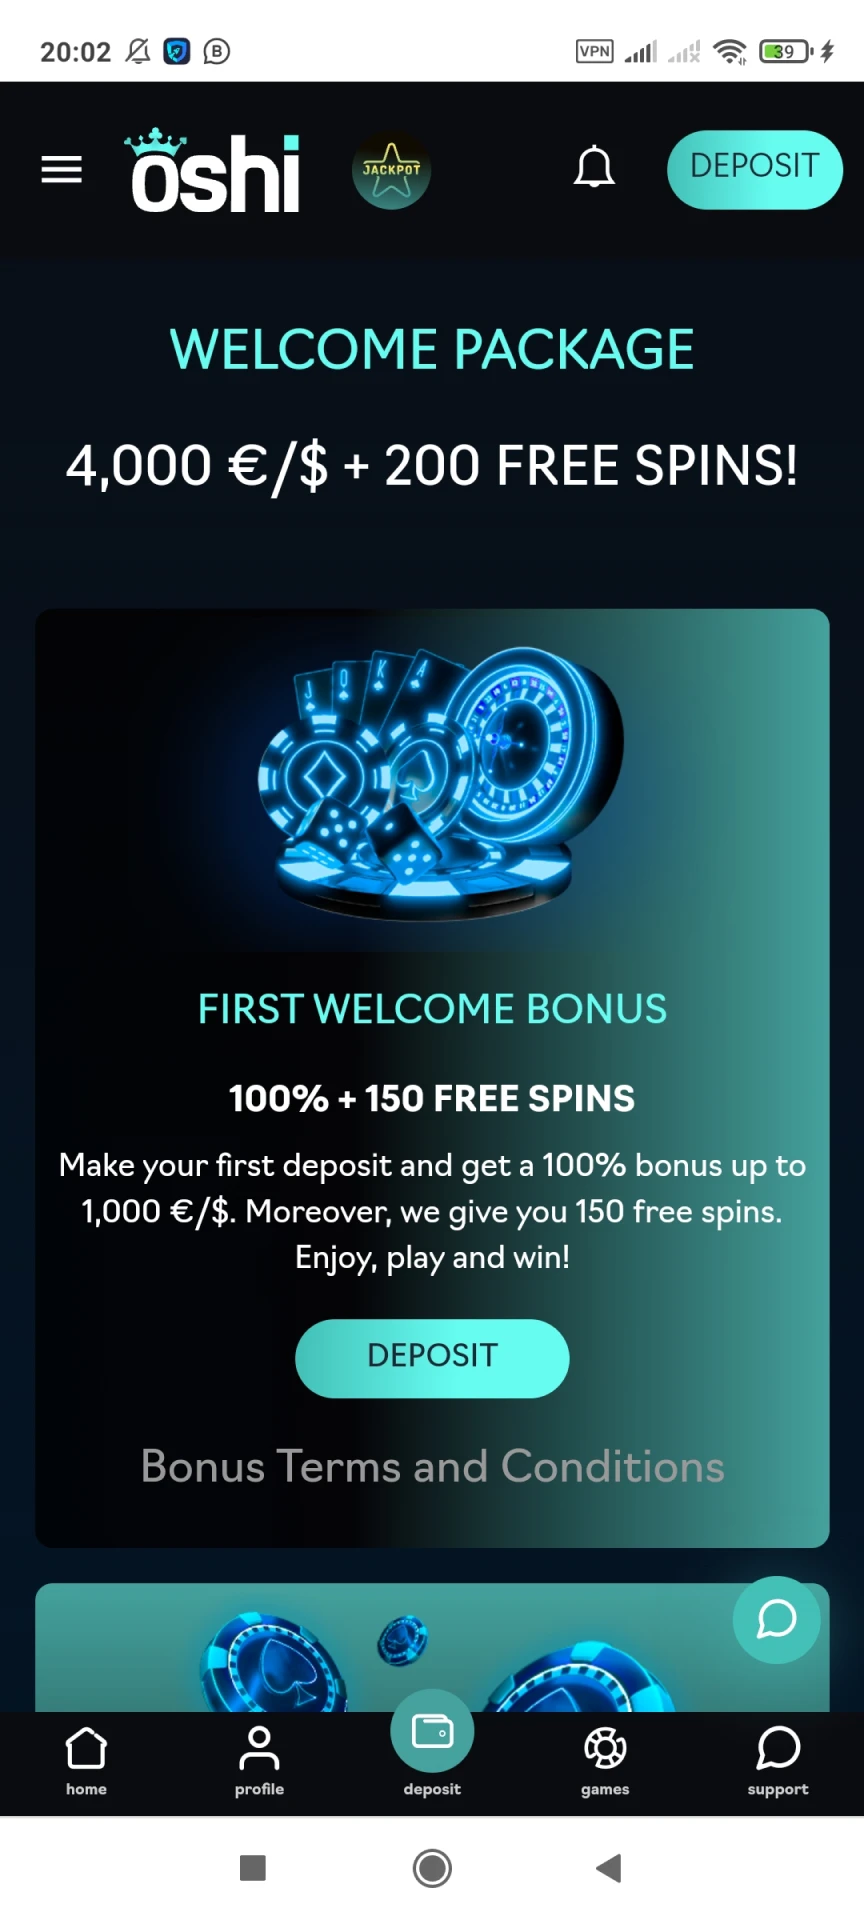 Visit the Oshi Casino app bonuses page.